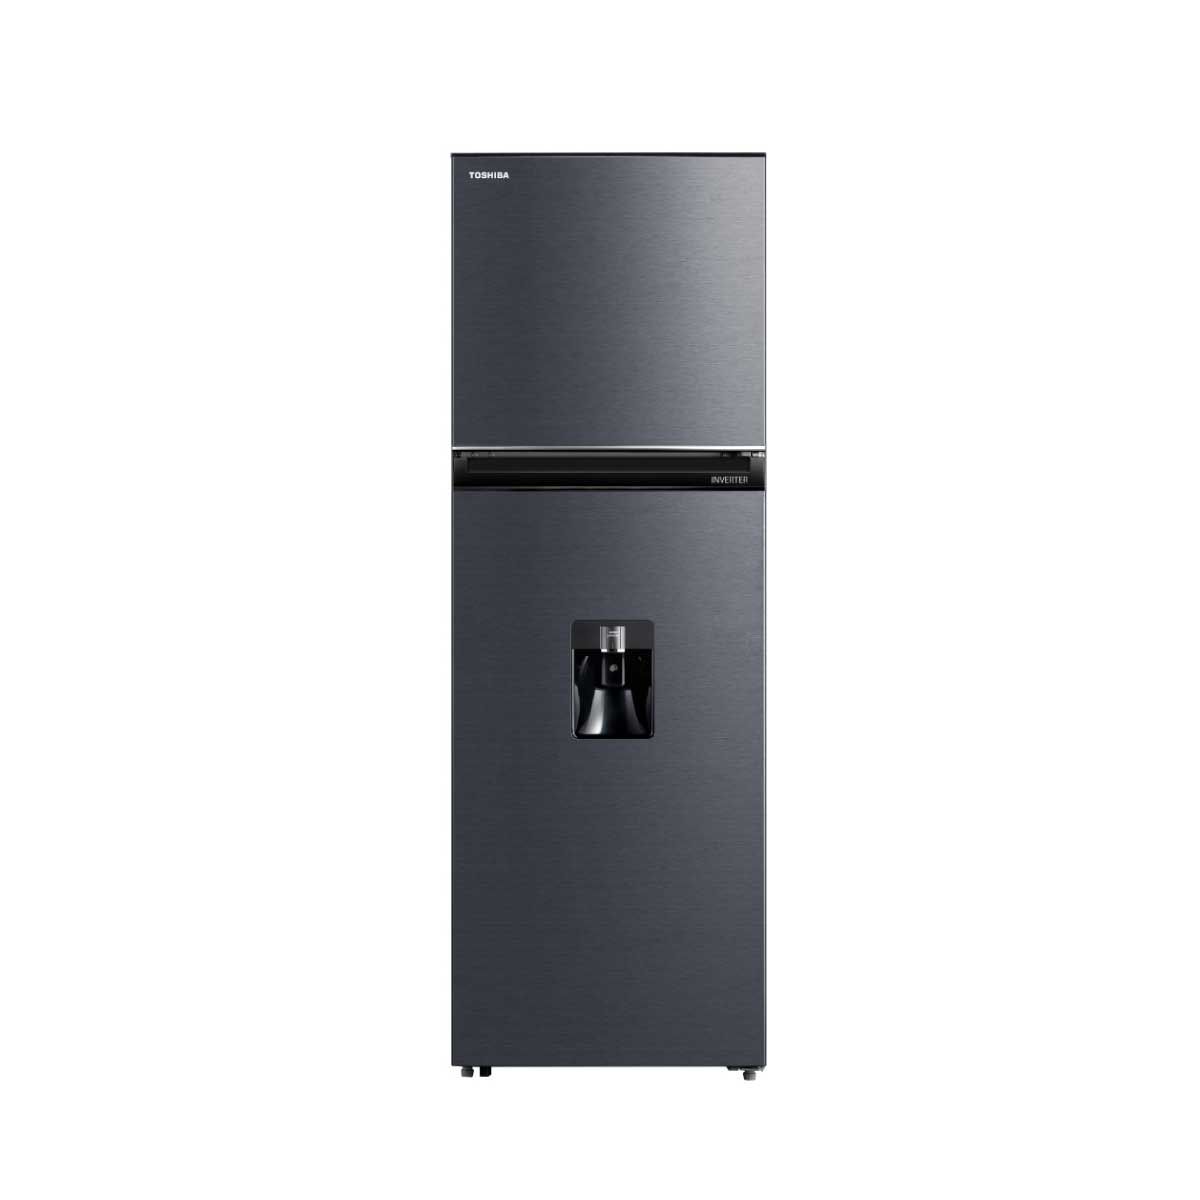 TOSHIBA ตู้เย็น 2 ประตู 8.8 Q INVERTER สีเทา พร้อมกดน้ำหน้าตู้  รุ่น GR-RT325WE-PMT(06)